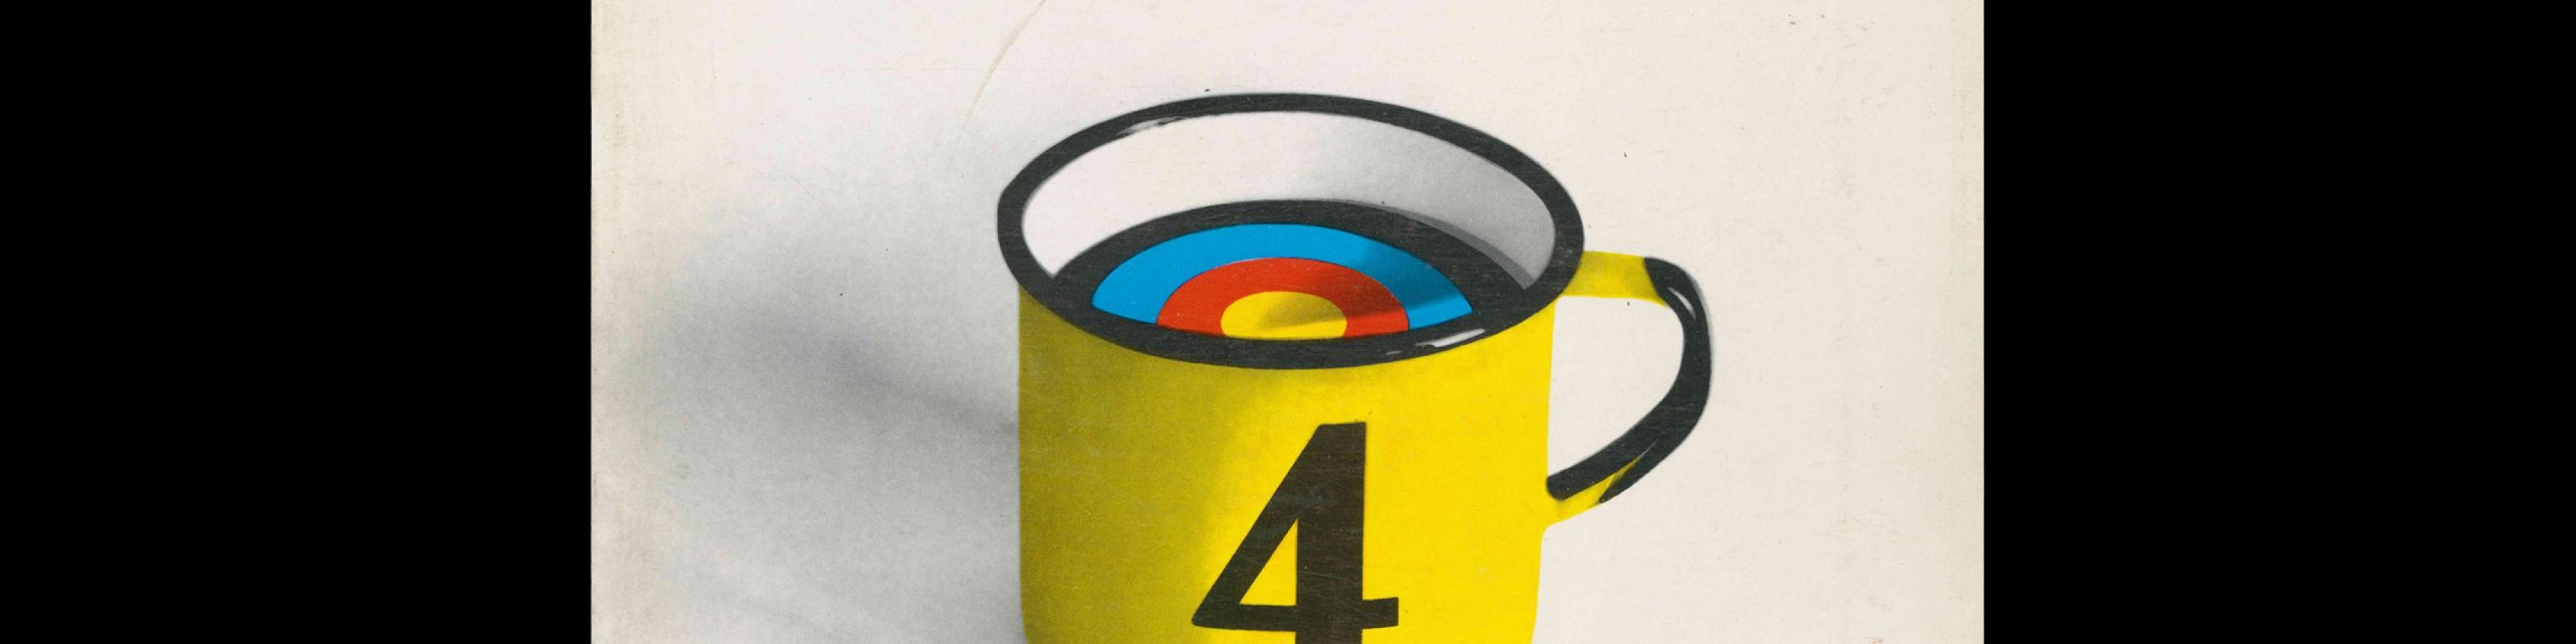 Projekt 116, 1, 1977. Cover design by Wojciech Freudenreich